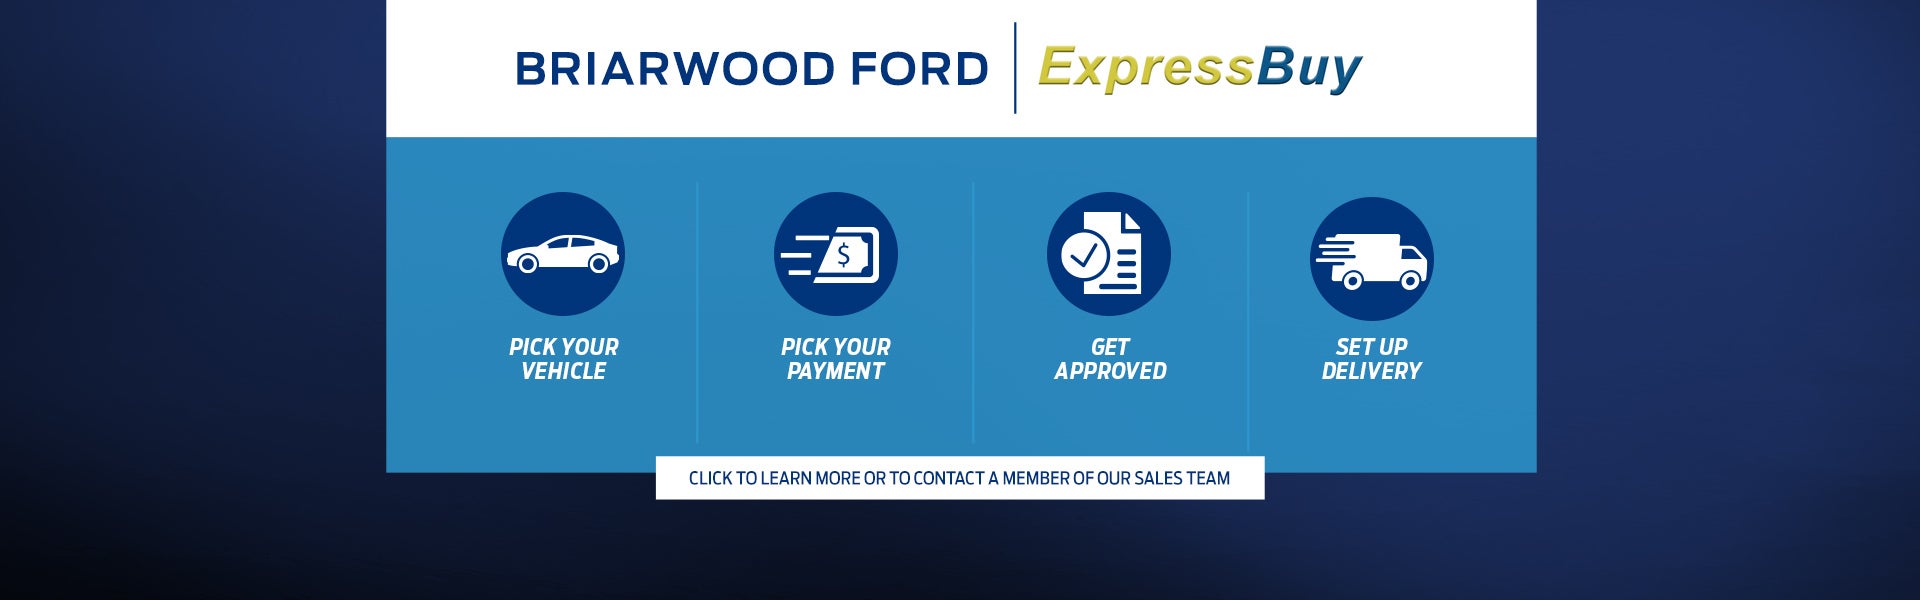 Briarwood Ford ExpressBuy